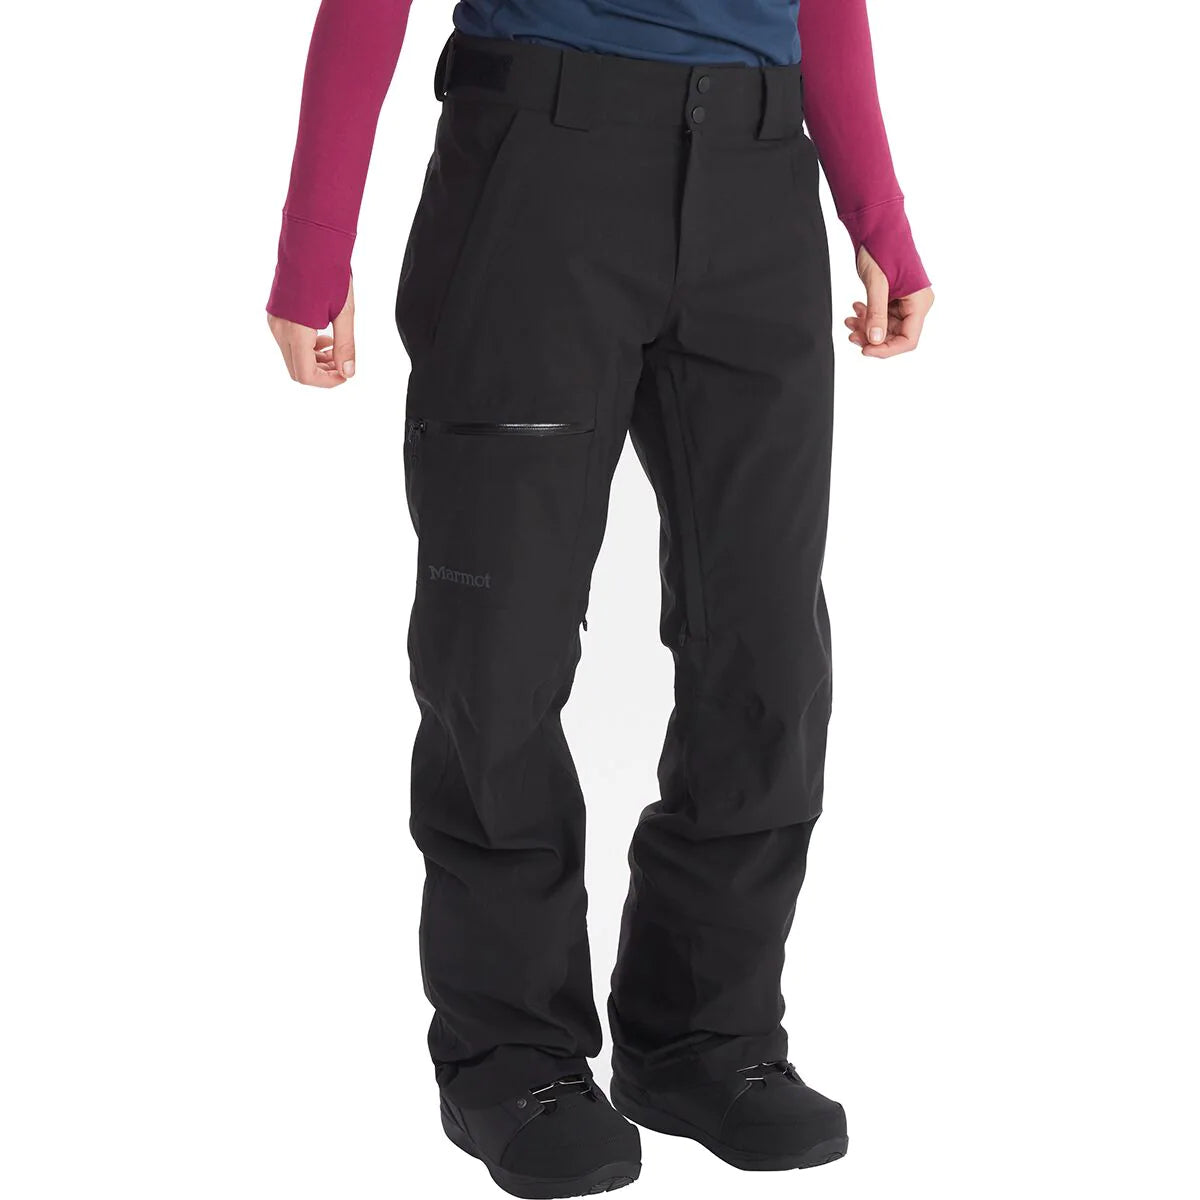 Black Snow/ Water resistant women's pant, reinforced zippers. 